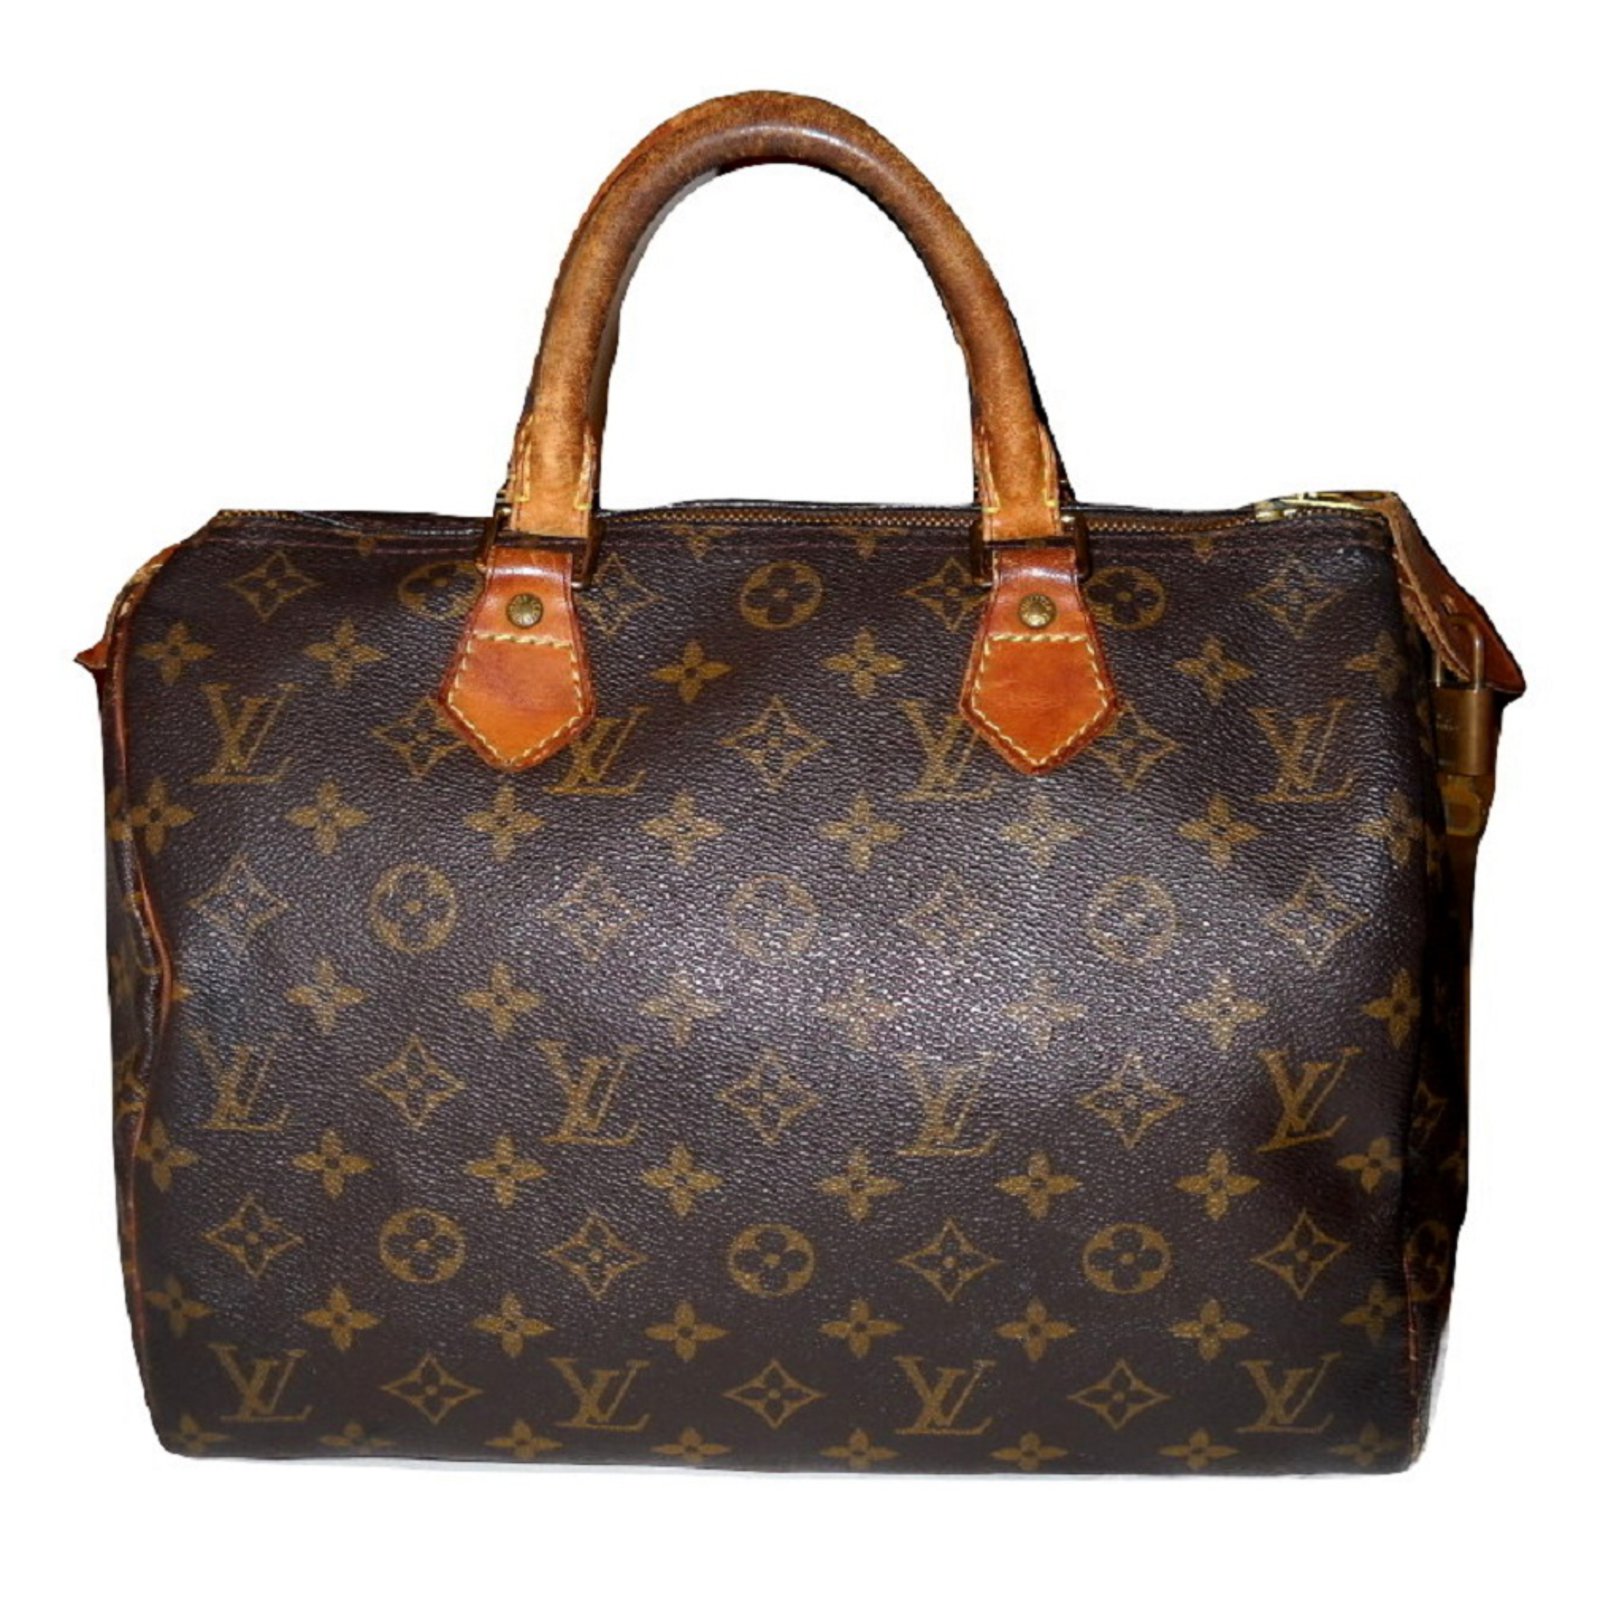  Louis  Vuitton  vintage Speedy 30 Handbags  Leather Cloth  